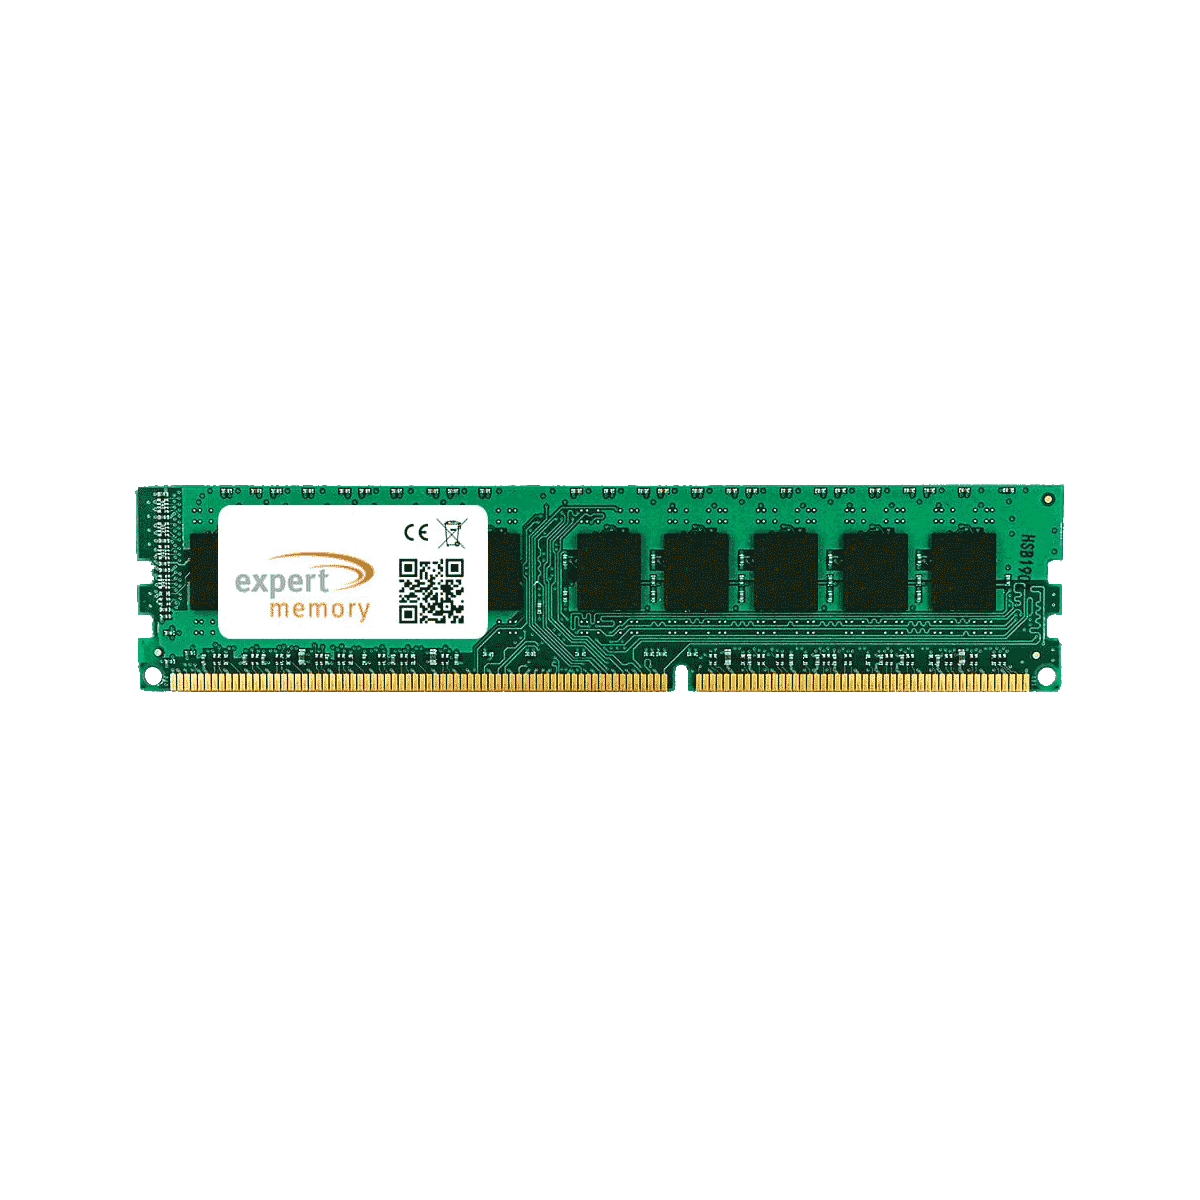 DDR3 Mainboard MEMORY Upgrade EXPERT 2Rx8 8GB 1600 Workstation/Desktop RAM UDIMM Gigabyte Memory GB 8 GA-H87N